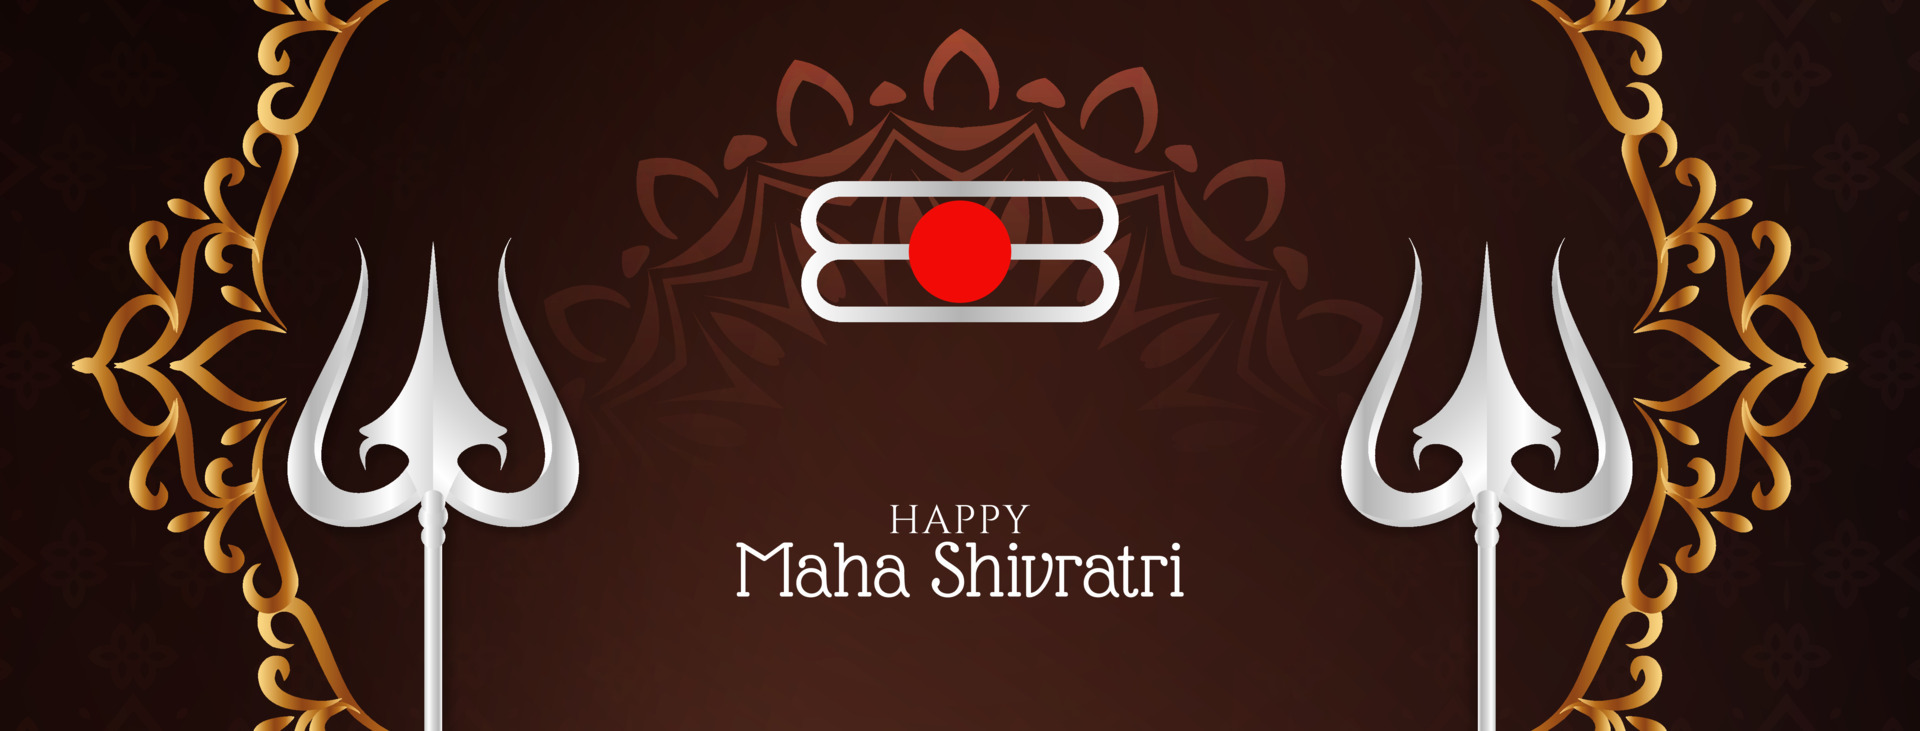 Happy Maha Shivratri festival classic mythological banner 5991812 ...